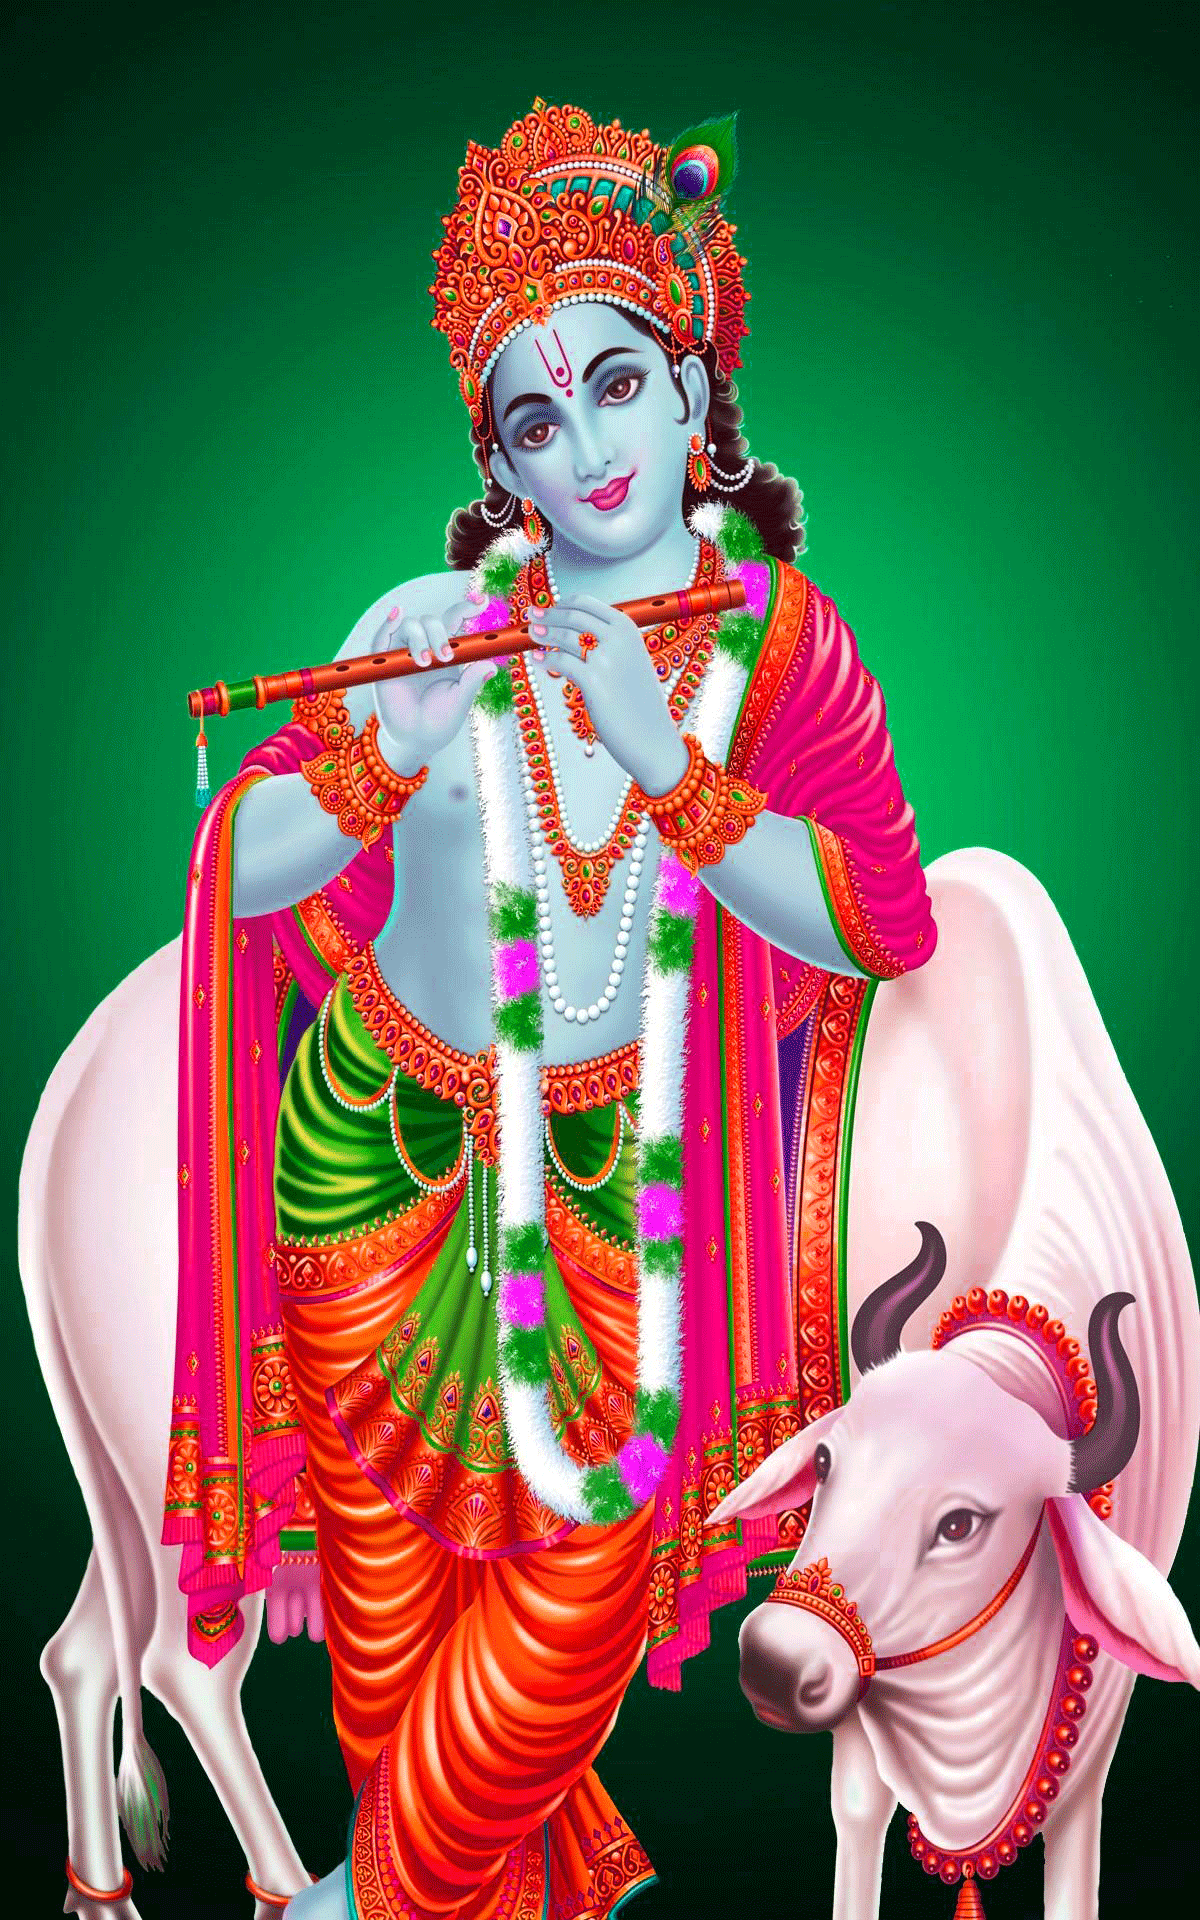 Hindu God Lord Krishna Image Wallpaper Pics Free Download